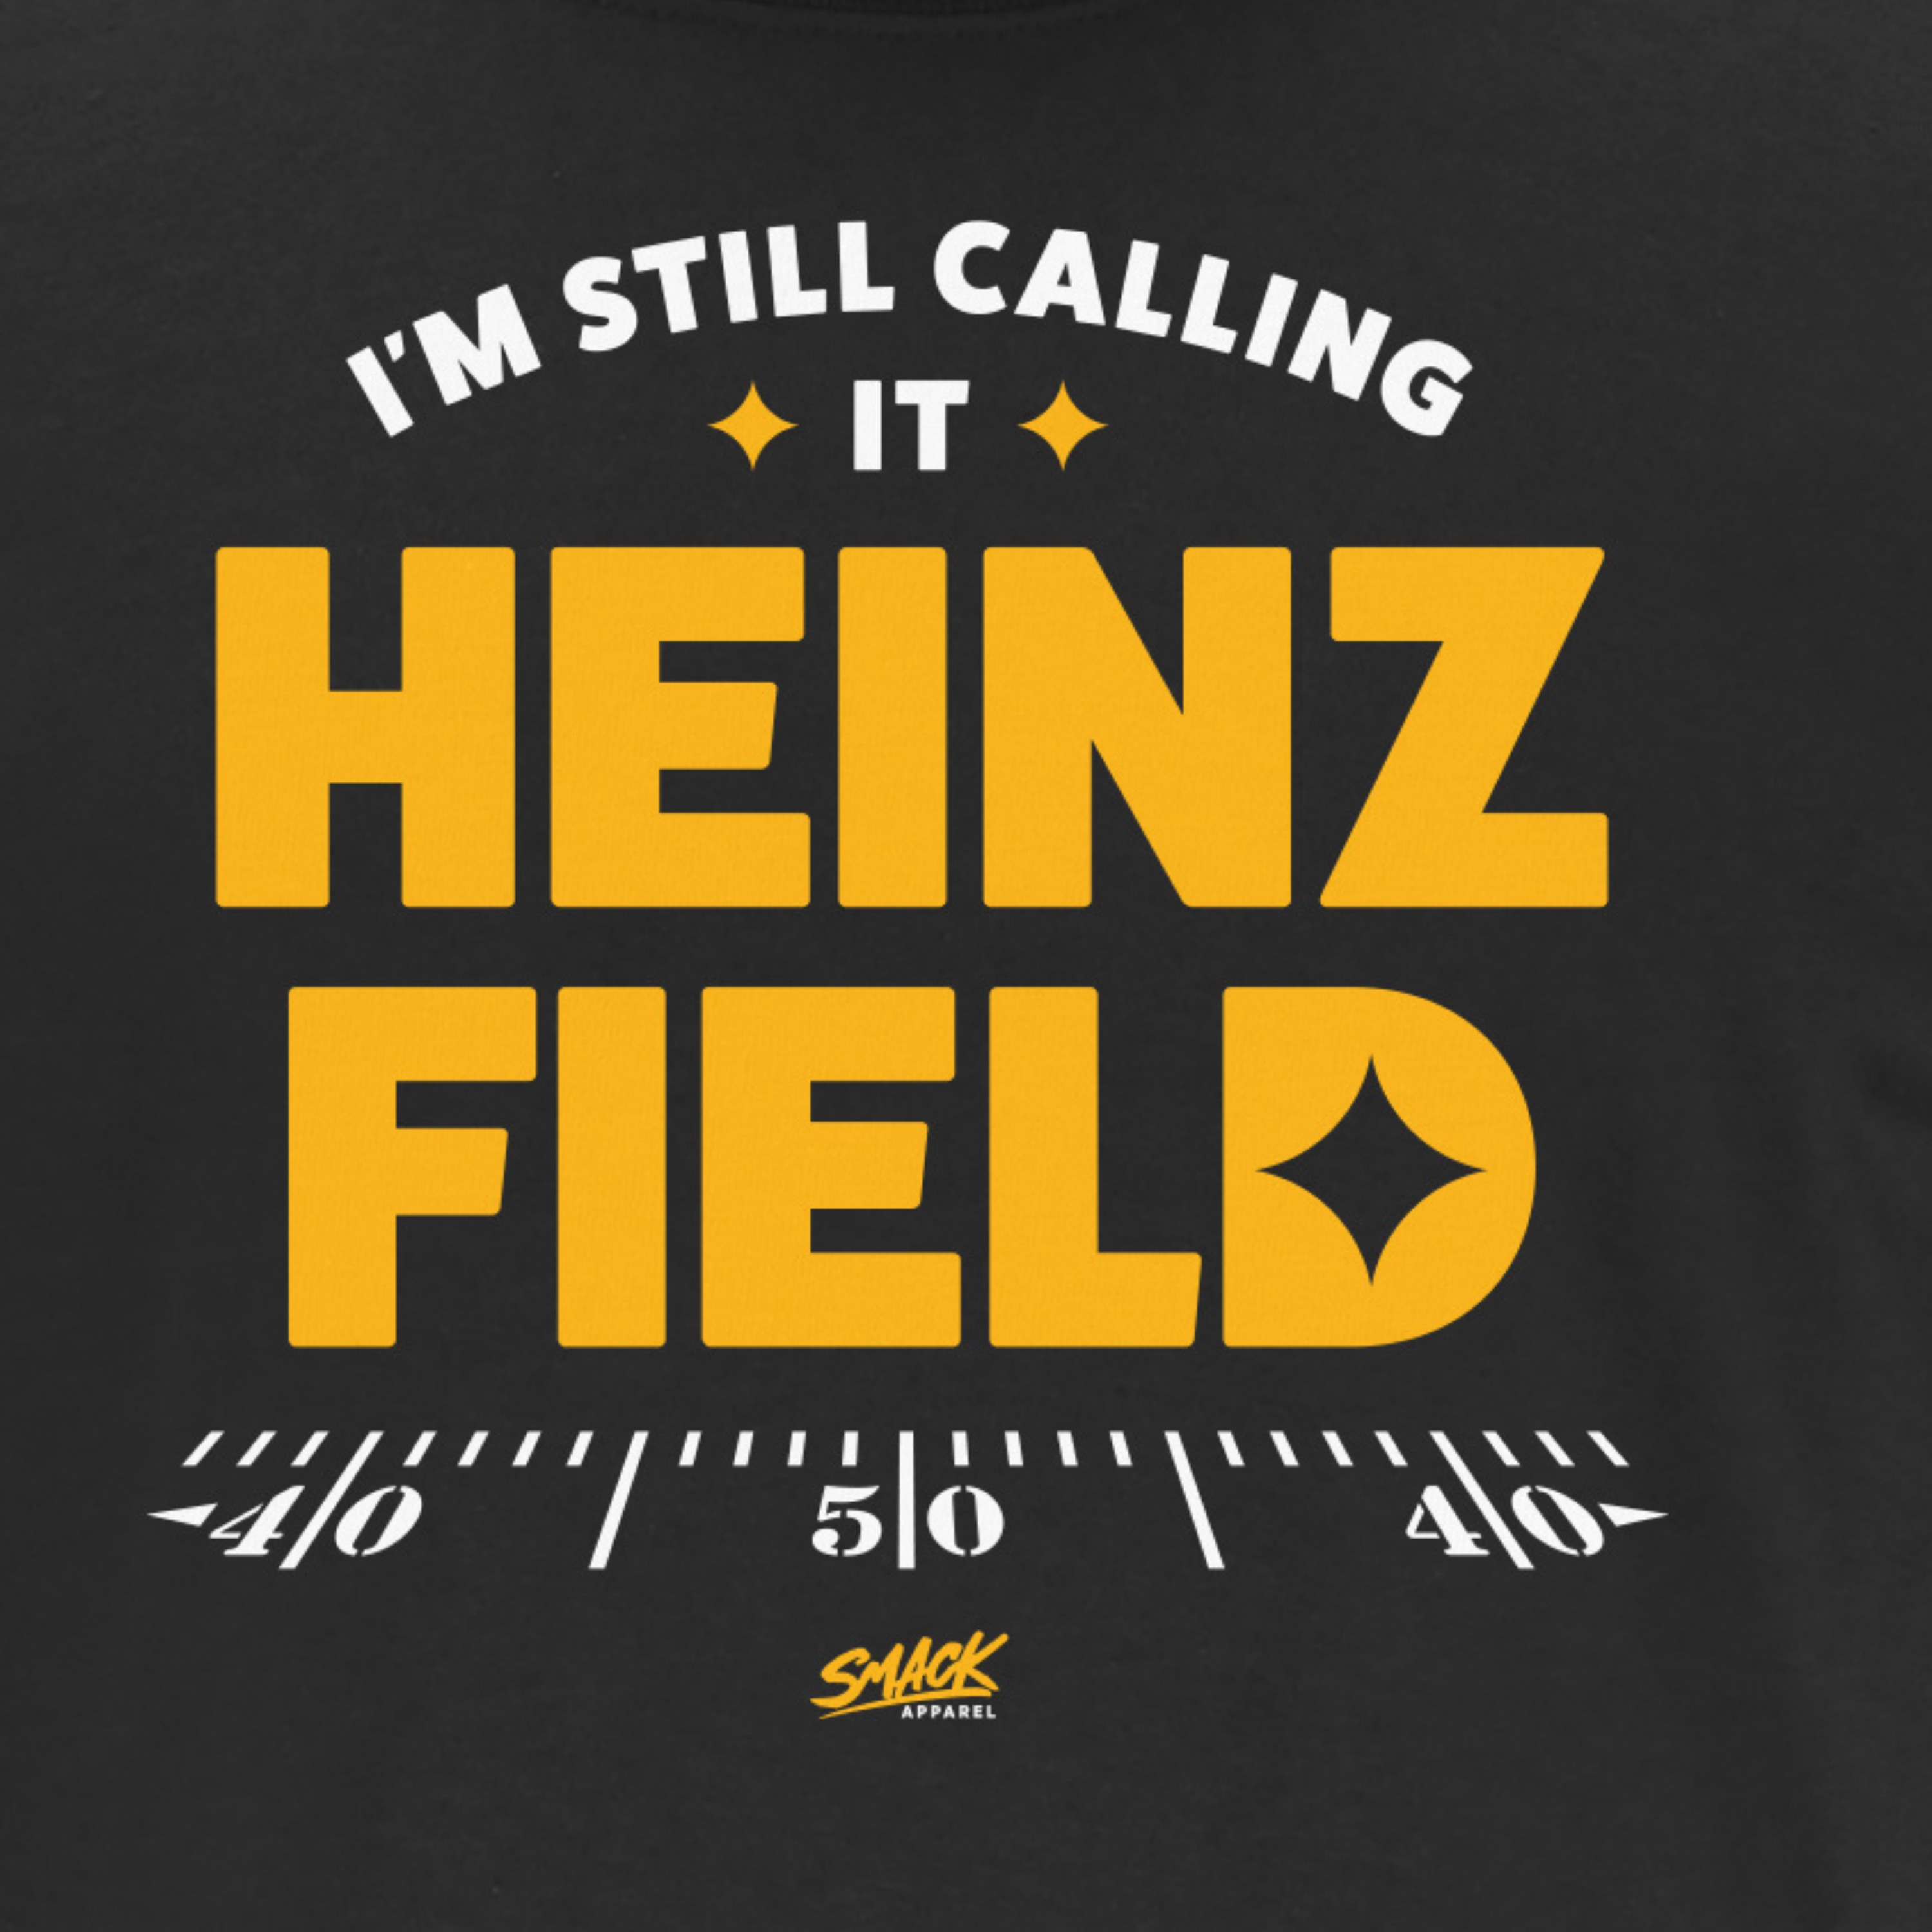 im still calling it heinz field